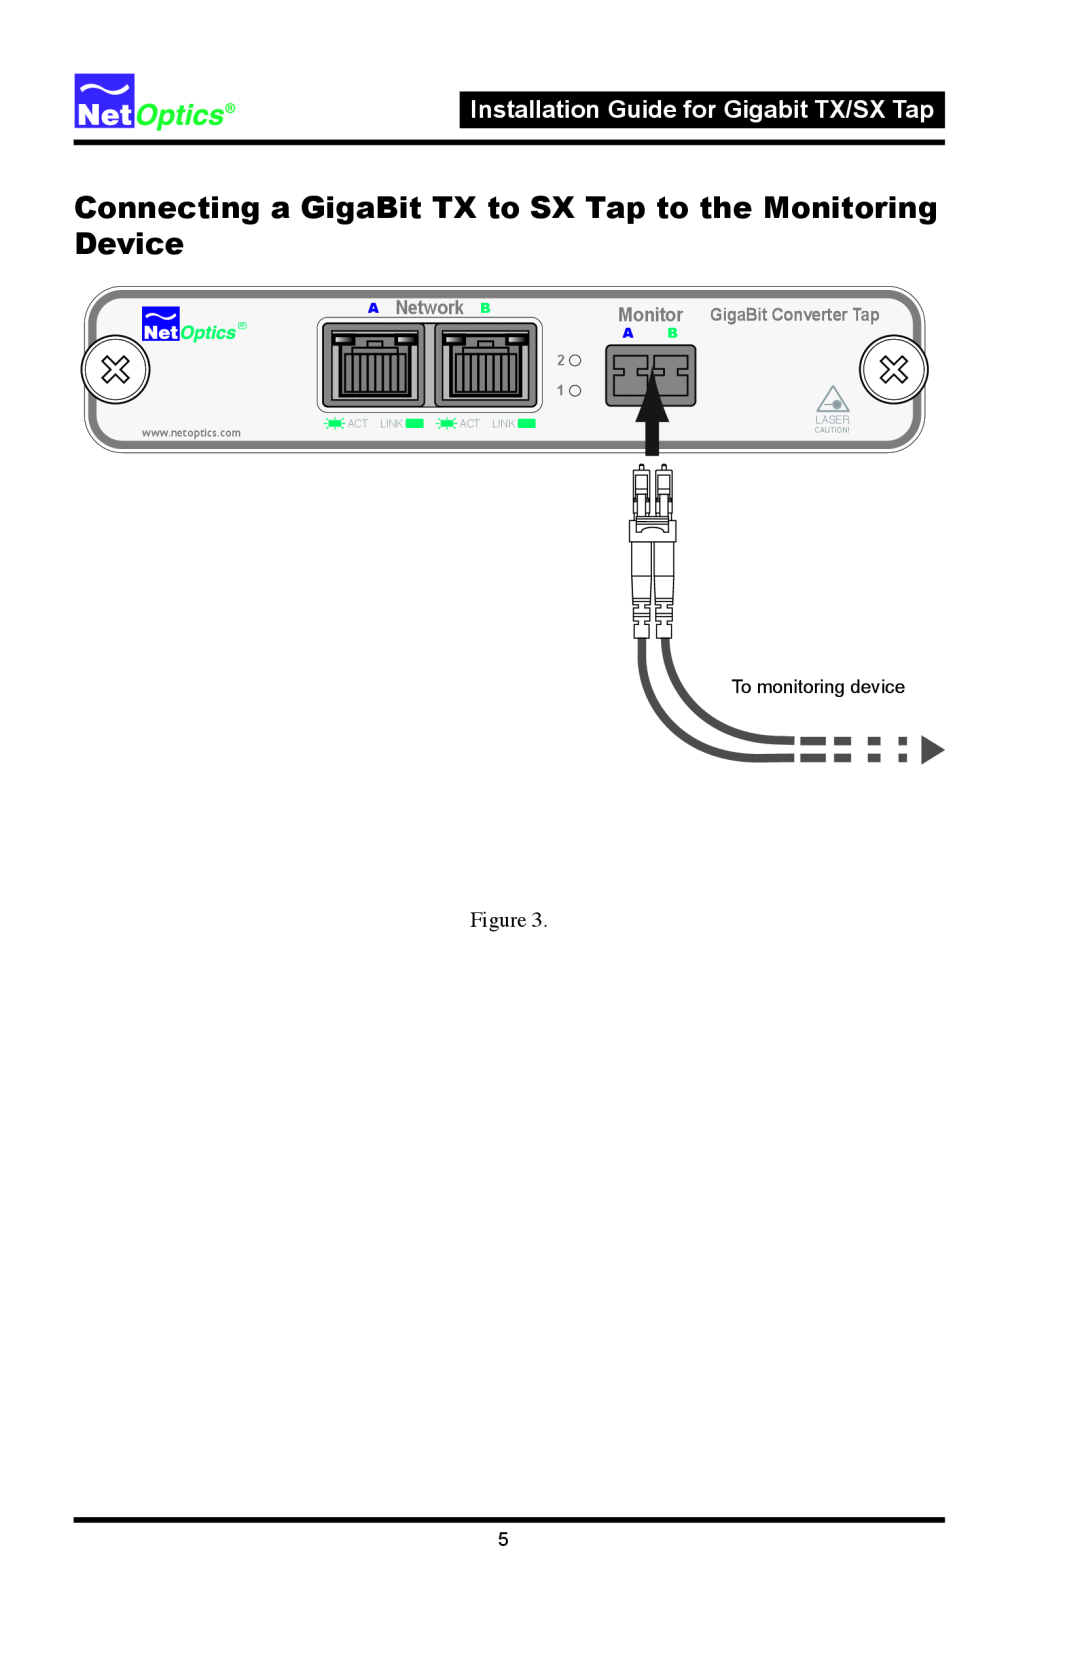 Nokia CVT-GCU/SX Installation Guide for Gigabit TX/SX Tap, A Network, To monitoring device, Monitor GigaBit Converter Tap 